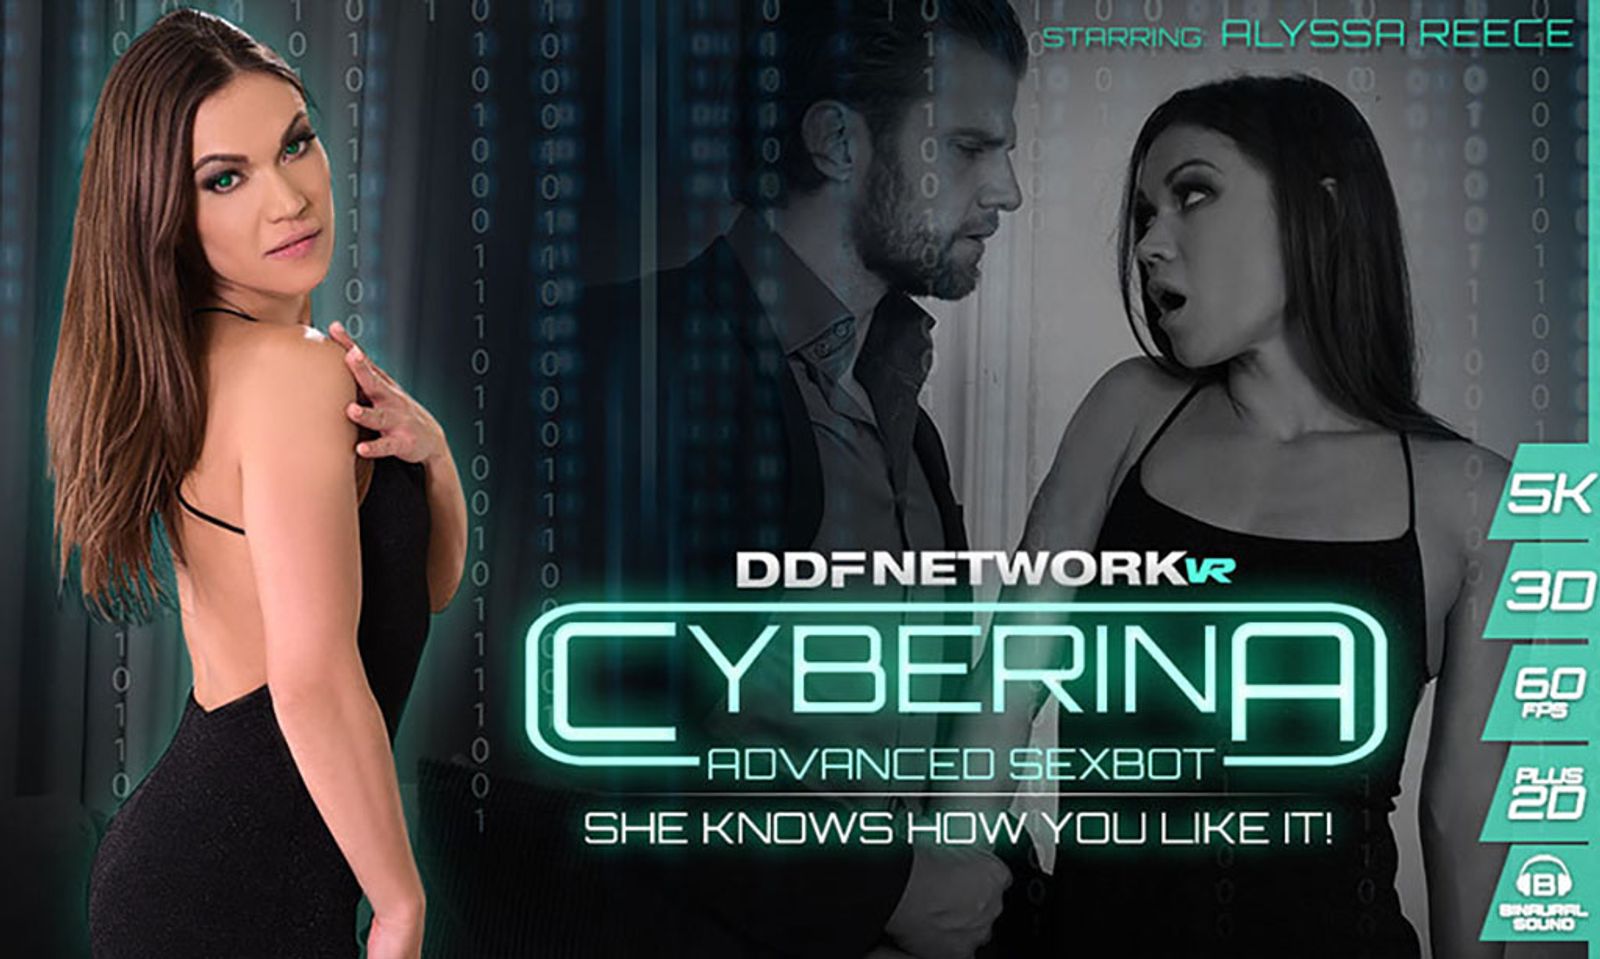 DDFNetworkVR Offers Alyssa Reece As 'Cyberina: Advanced Sexbot'